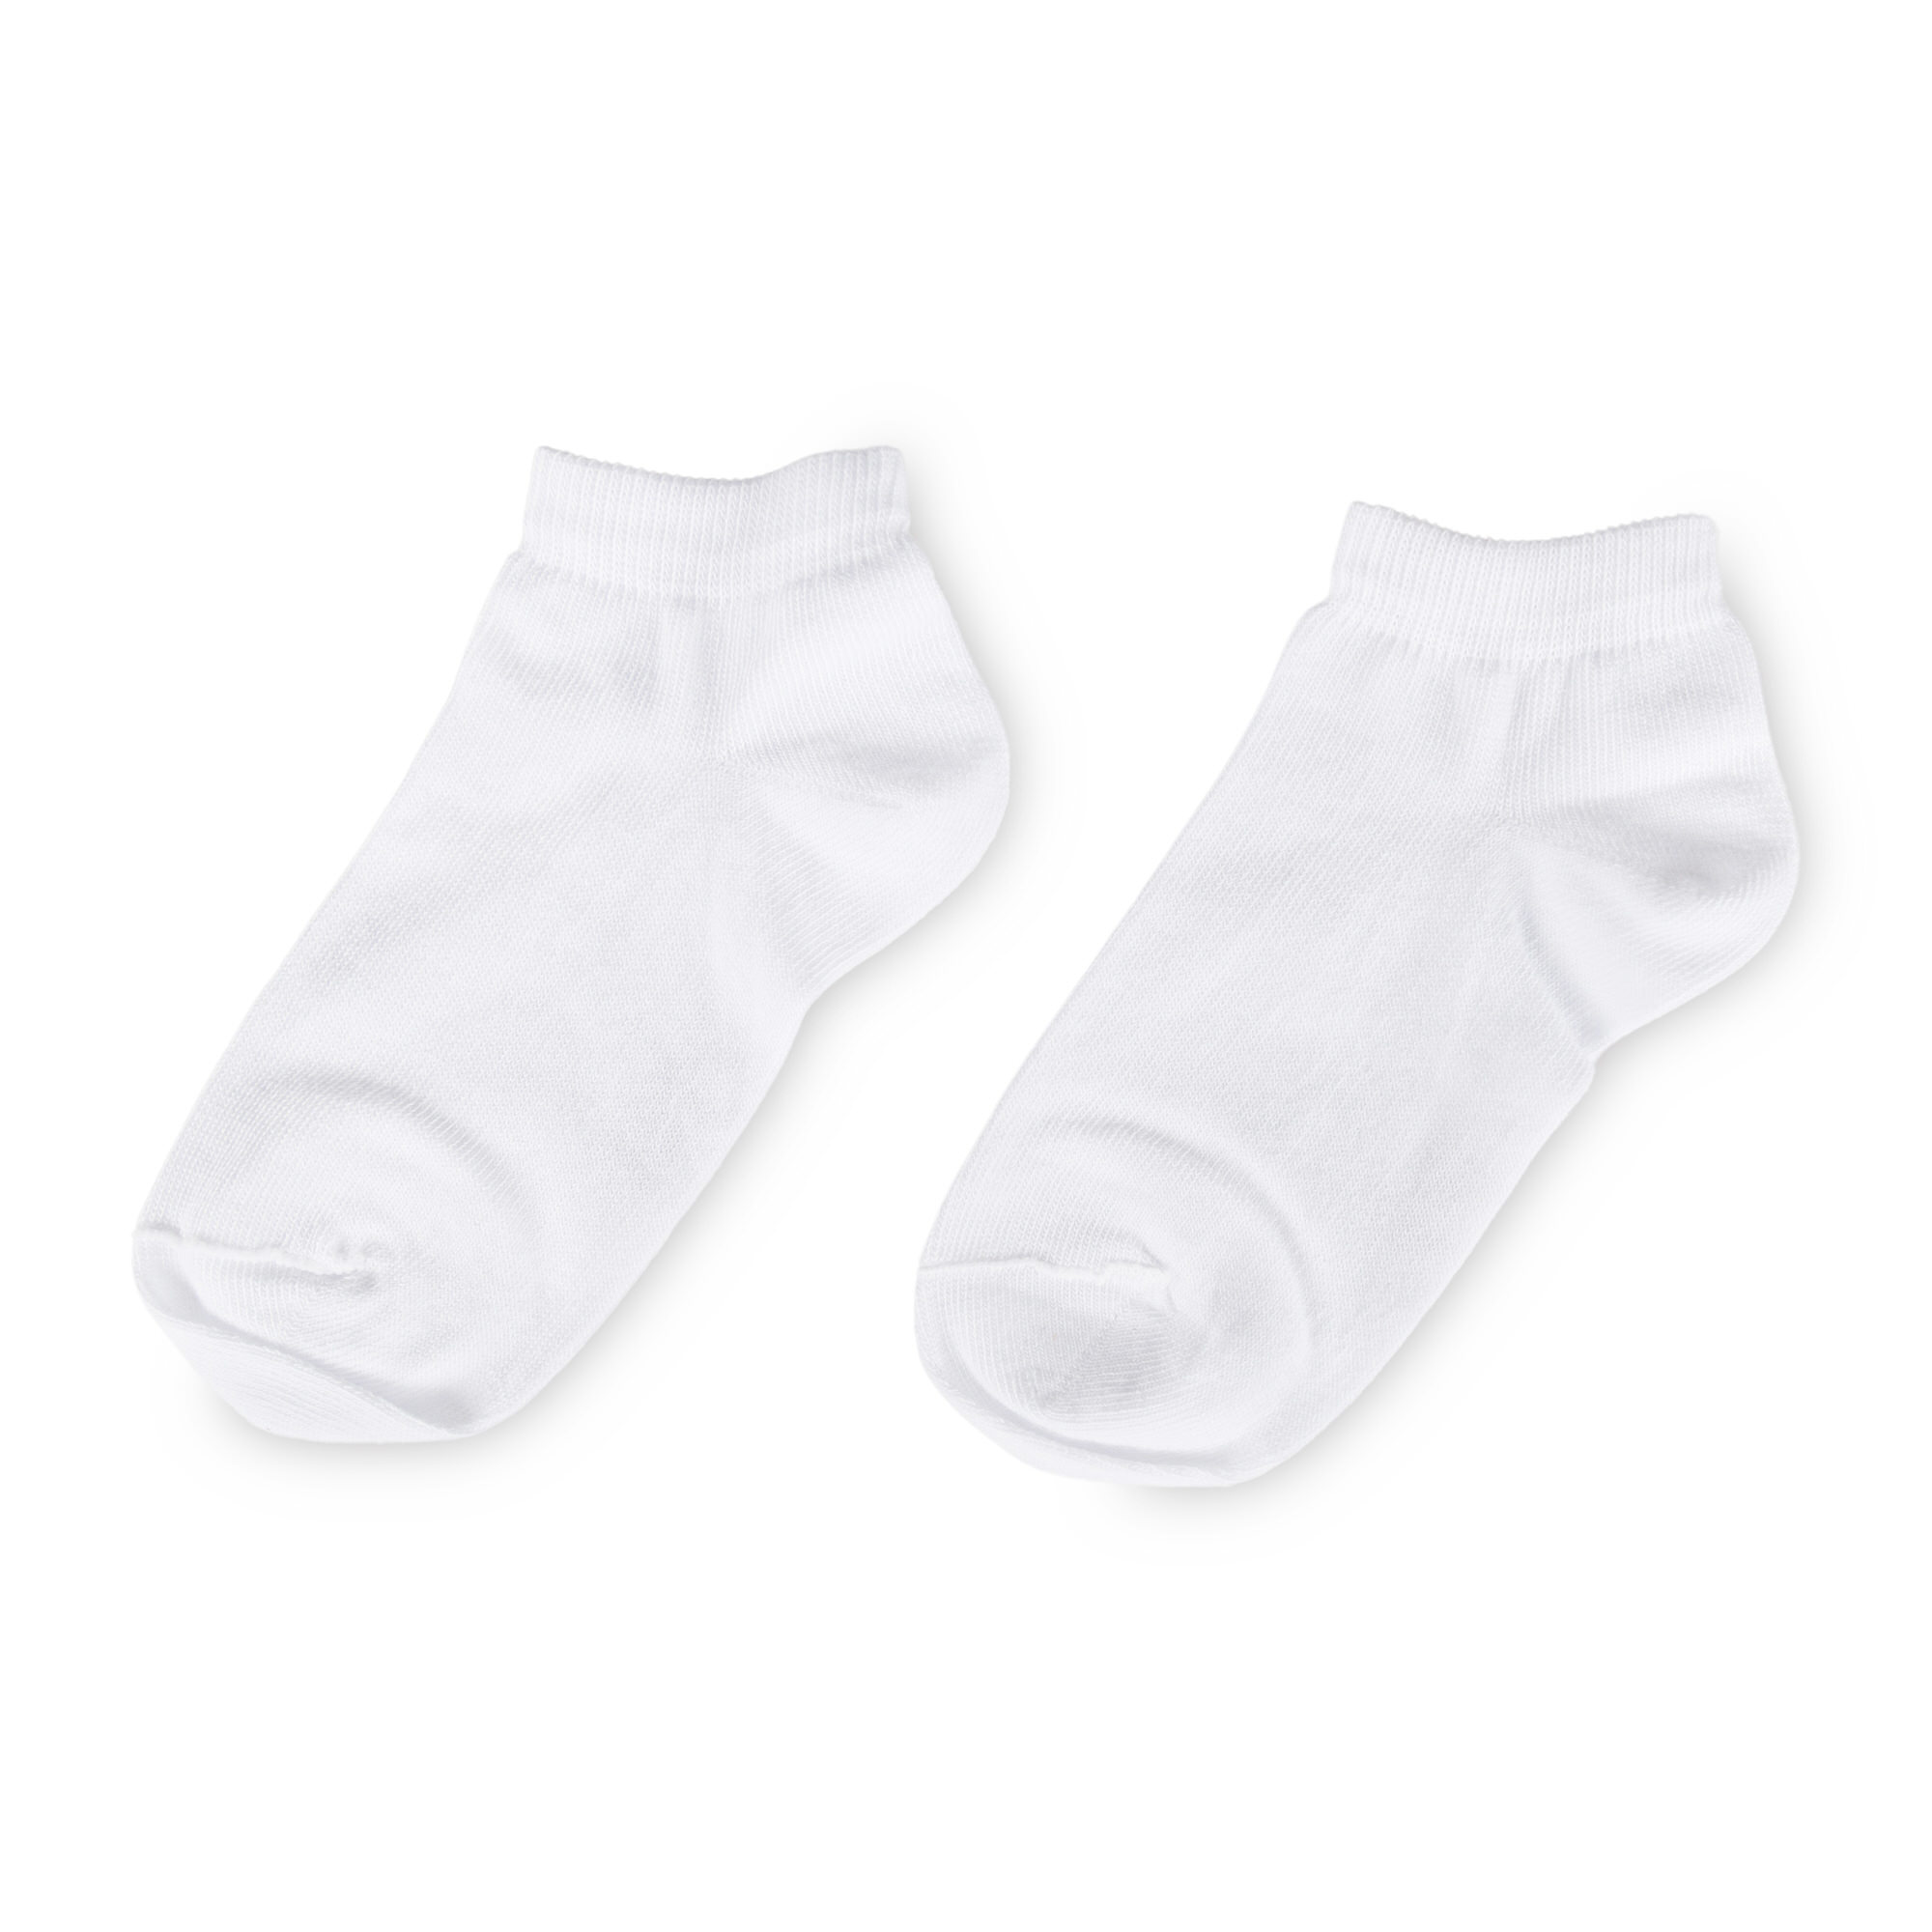 Children's trainer socks, white